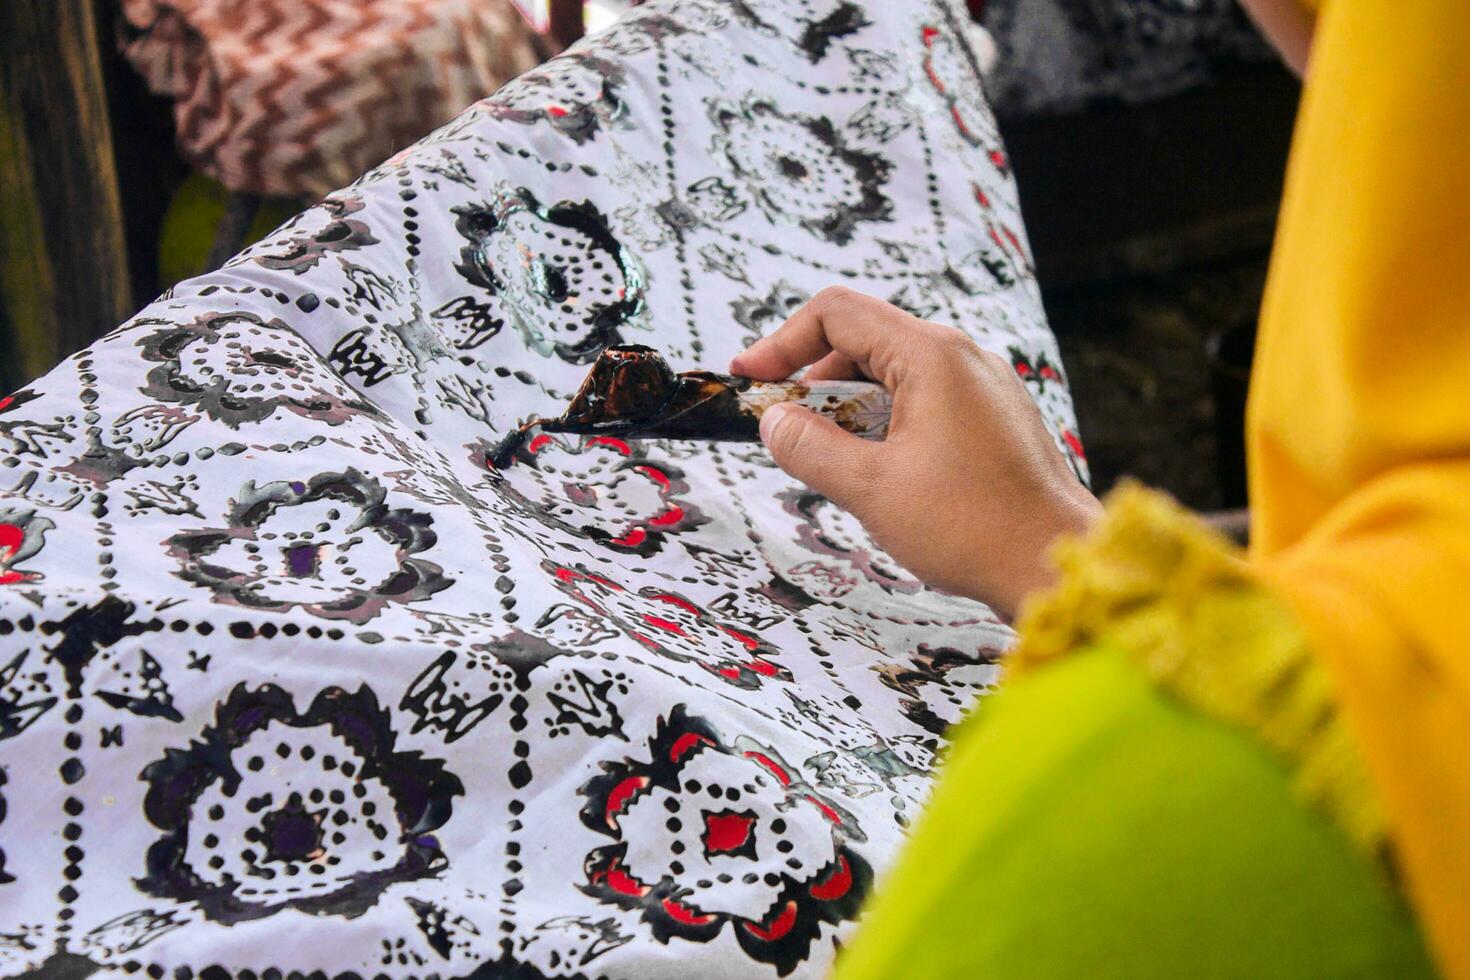 Coloring batik that has been drawn in Tasikmalaya, West Java, Indonesia photo